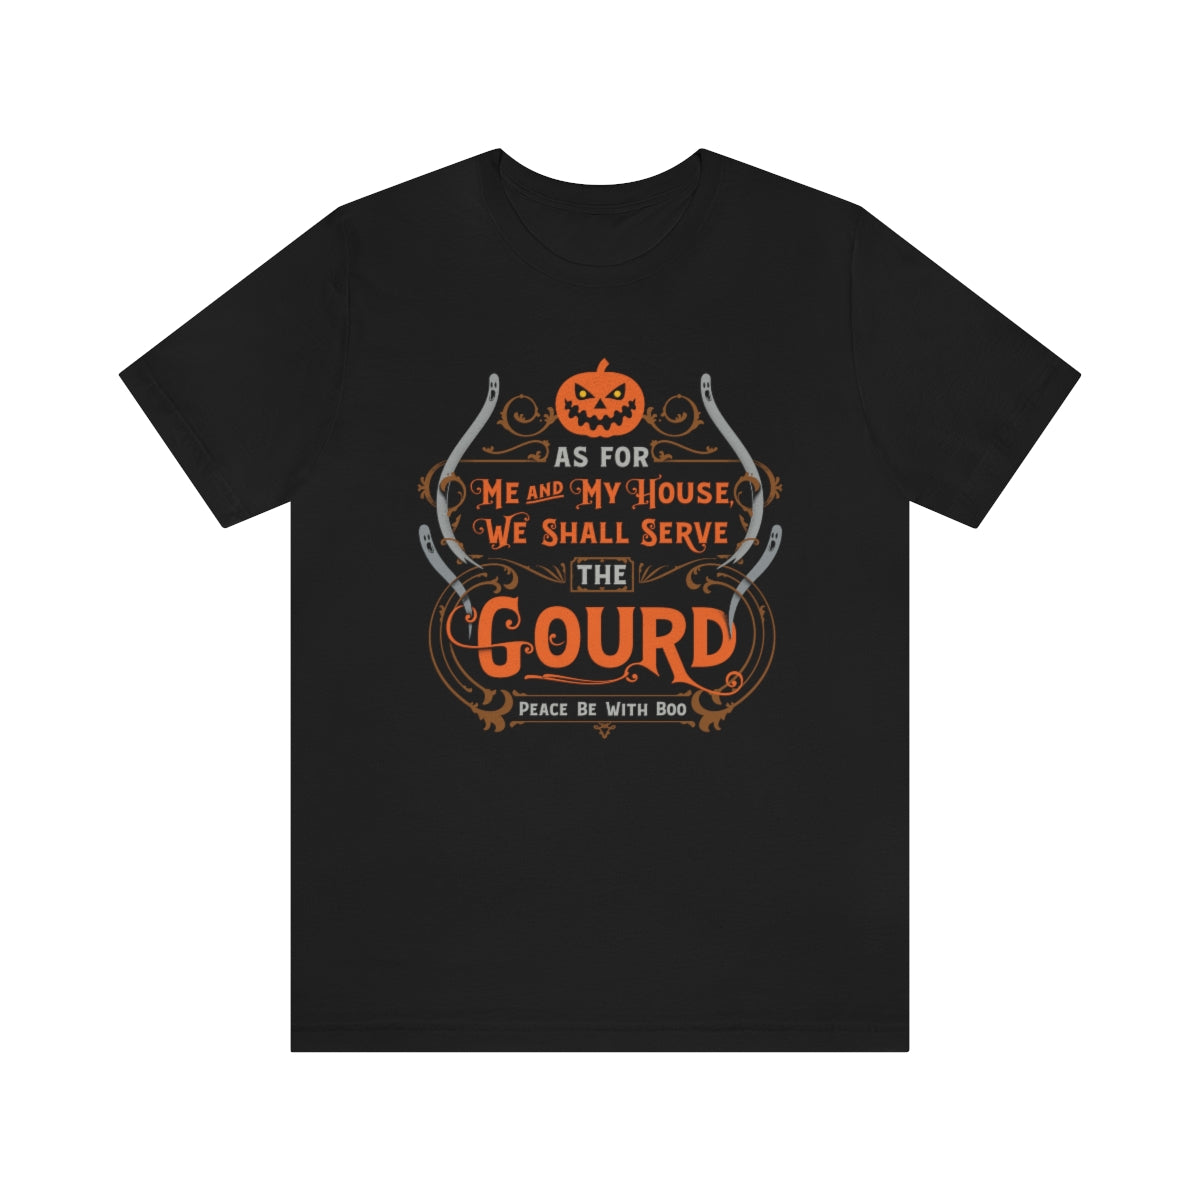 Serve the Gourd Tee